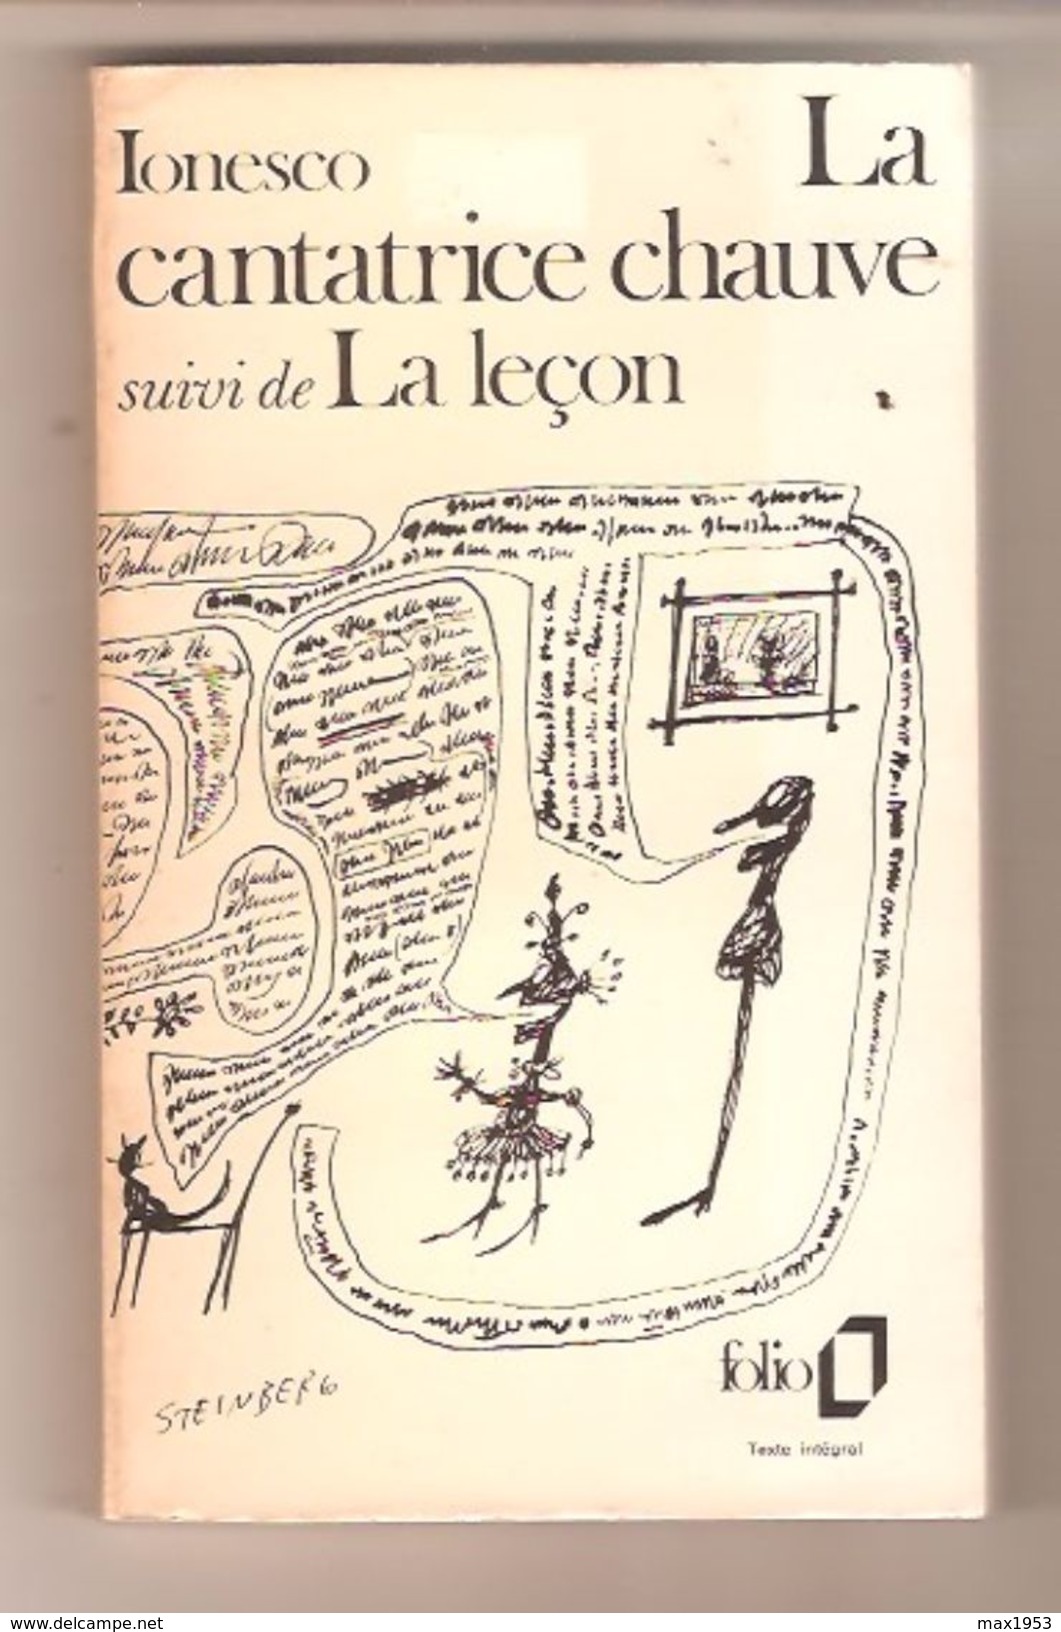 IONESCO - LA CANTATRICE CHAUVE Suivi De LA LECON - Gallimard Folio 236 - 1980 - Franse Schrijvers